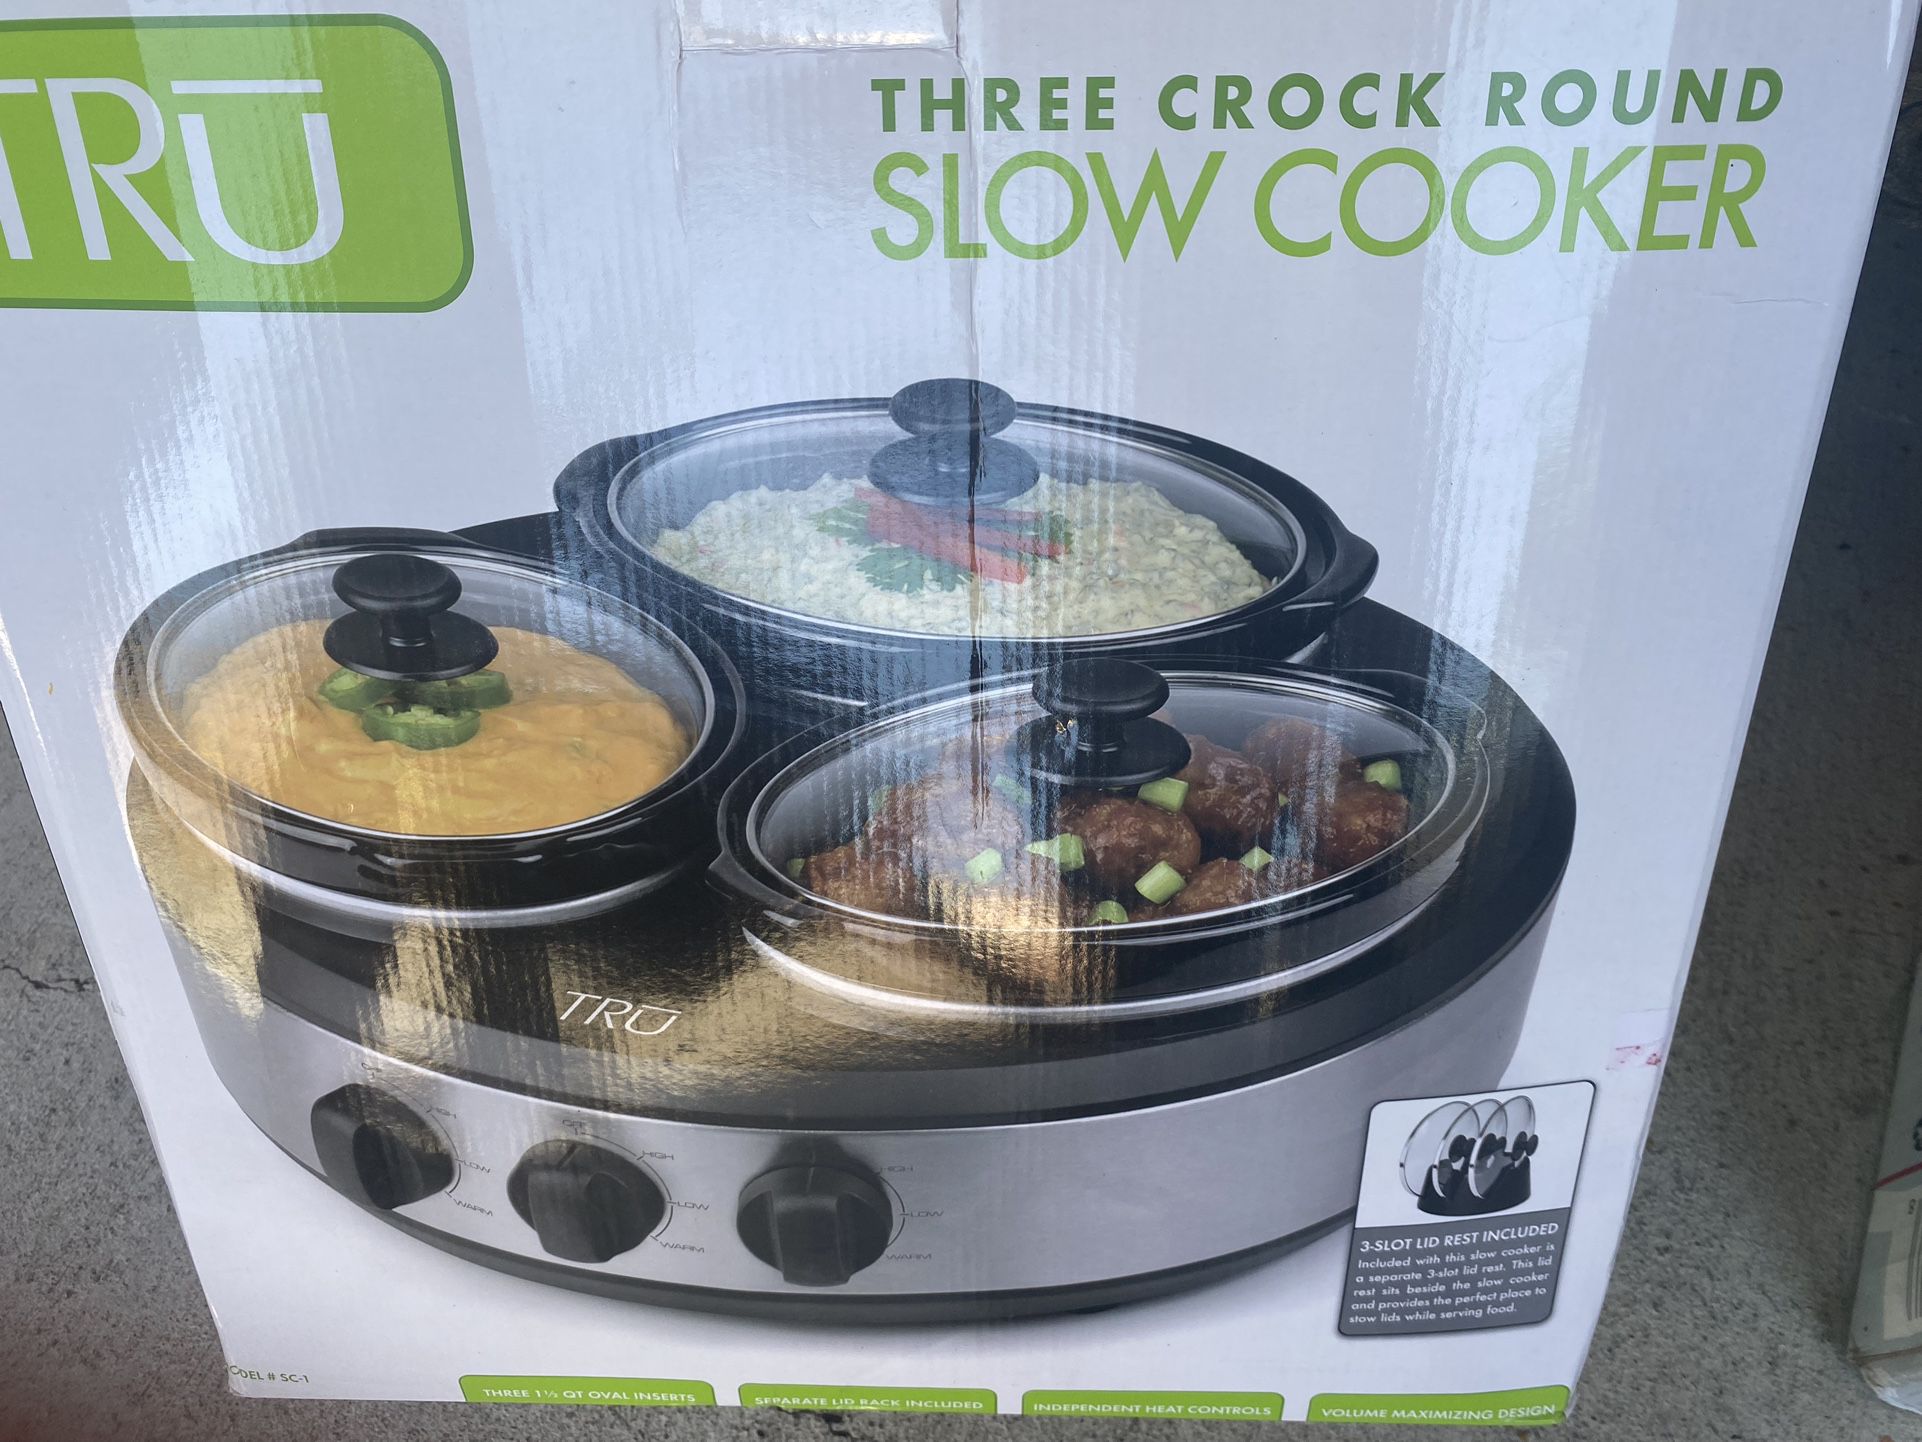 50 dollars brand new/Tru Three Crock Round Slow Cooker/ brand new 